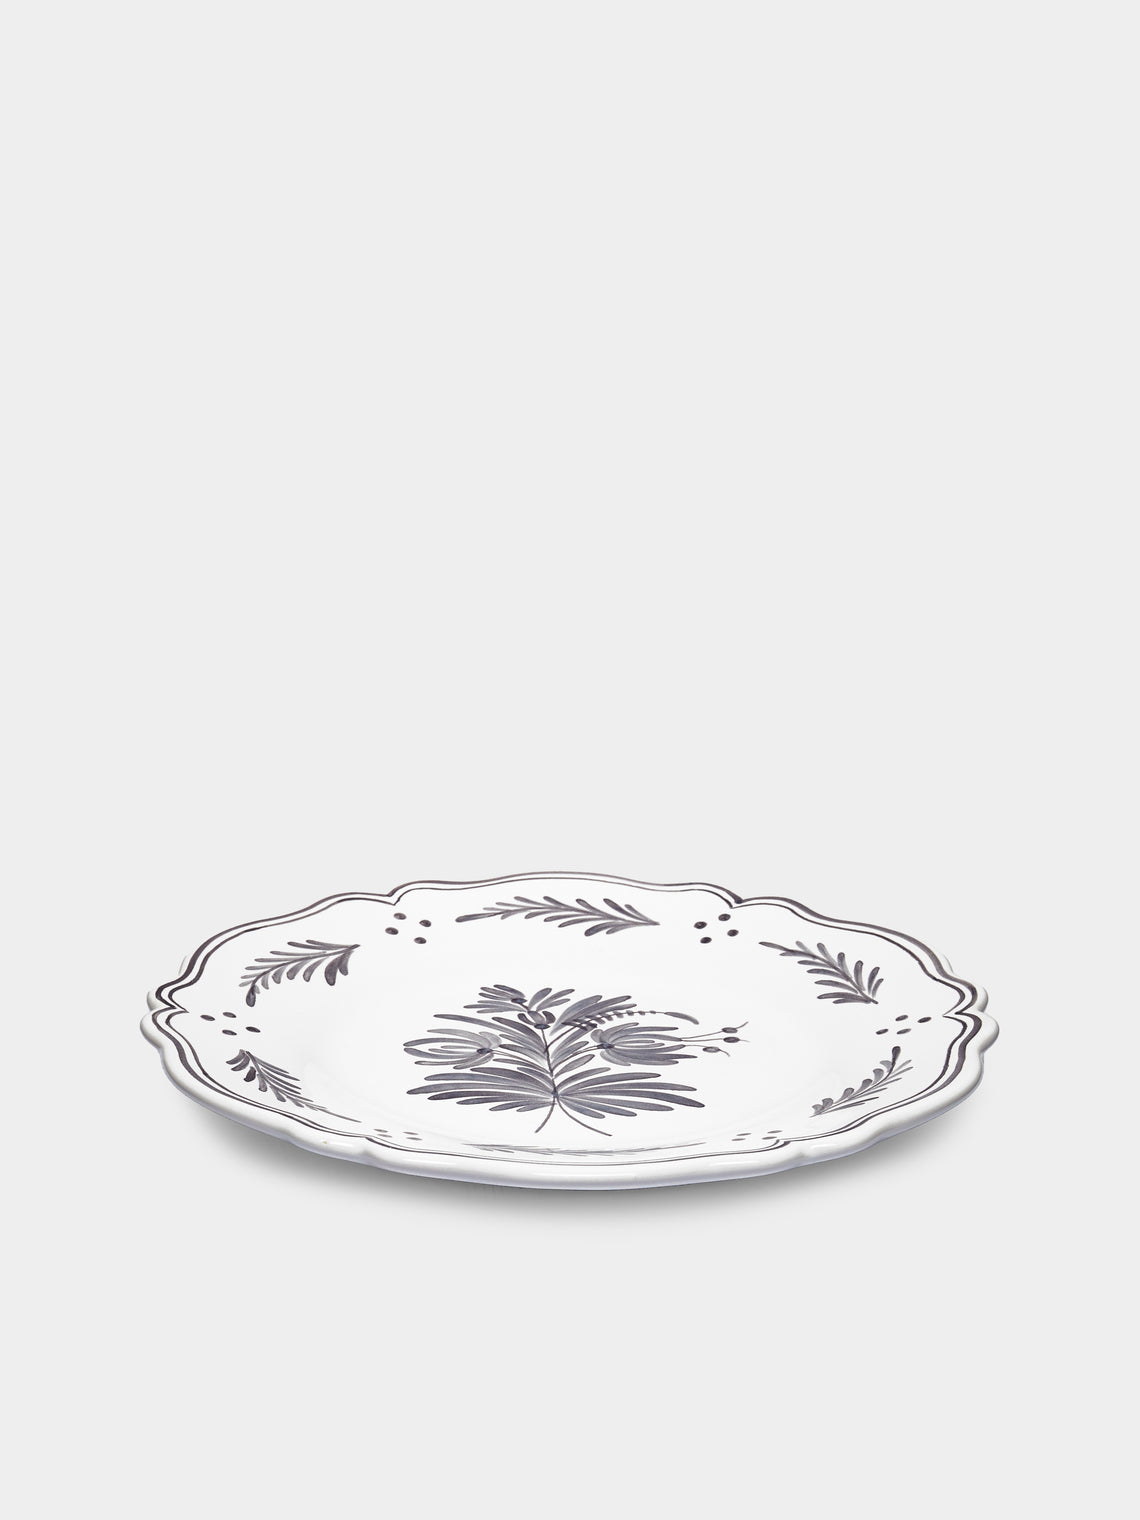 Bourg Joly Malicorne - Antique Fleurs Hand-Painted Ceramic Dessert Plates (Set of 4) -  - ABASK